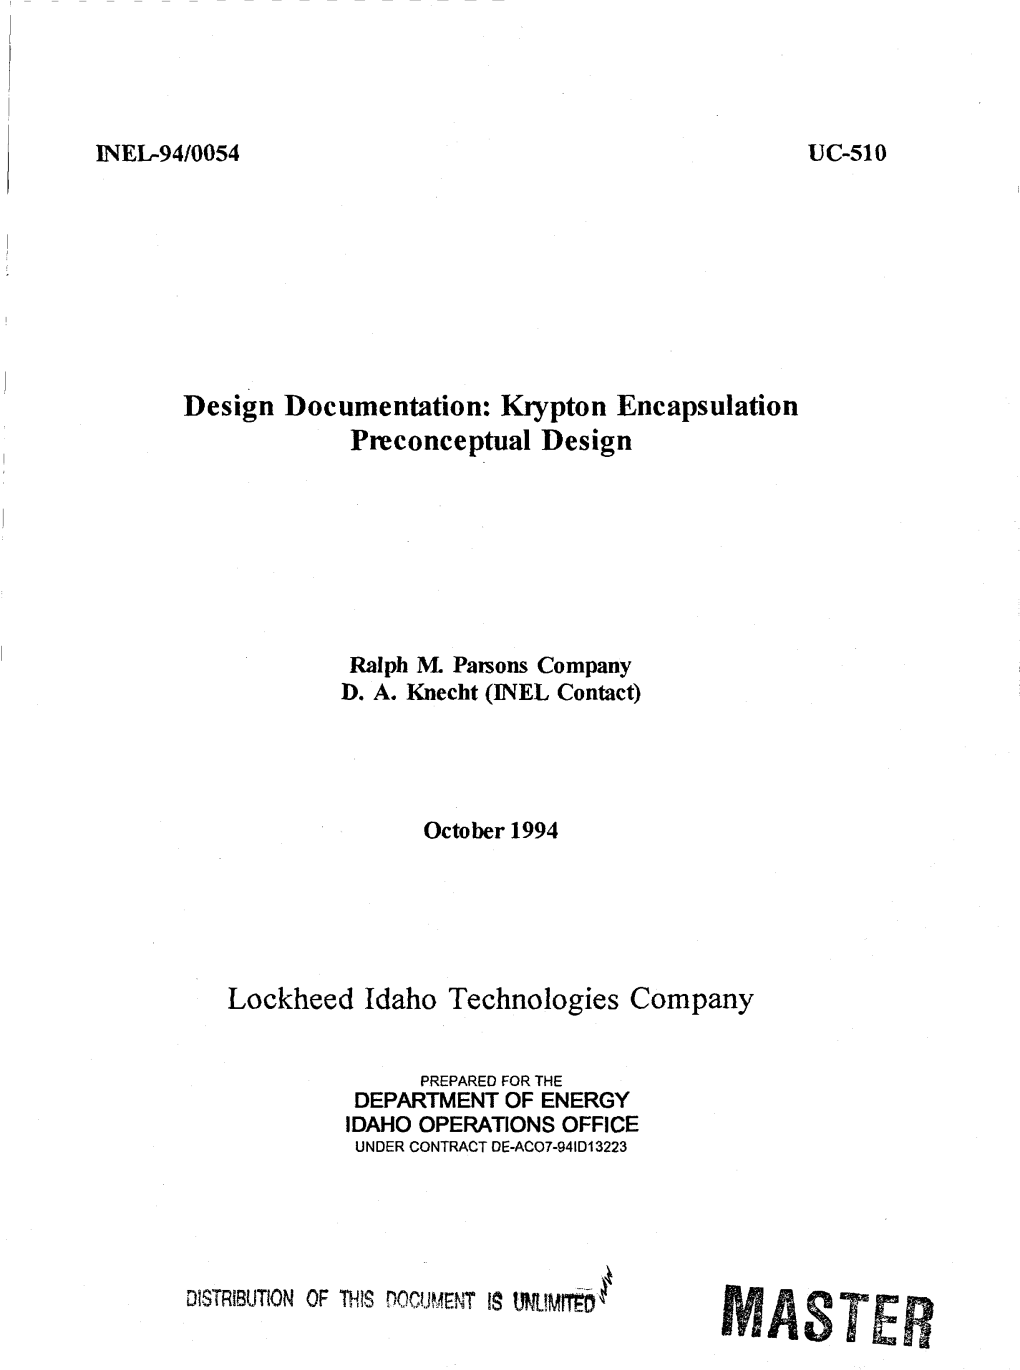 Kiypton Encapsulation Preconceptual Design